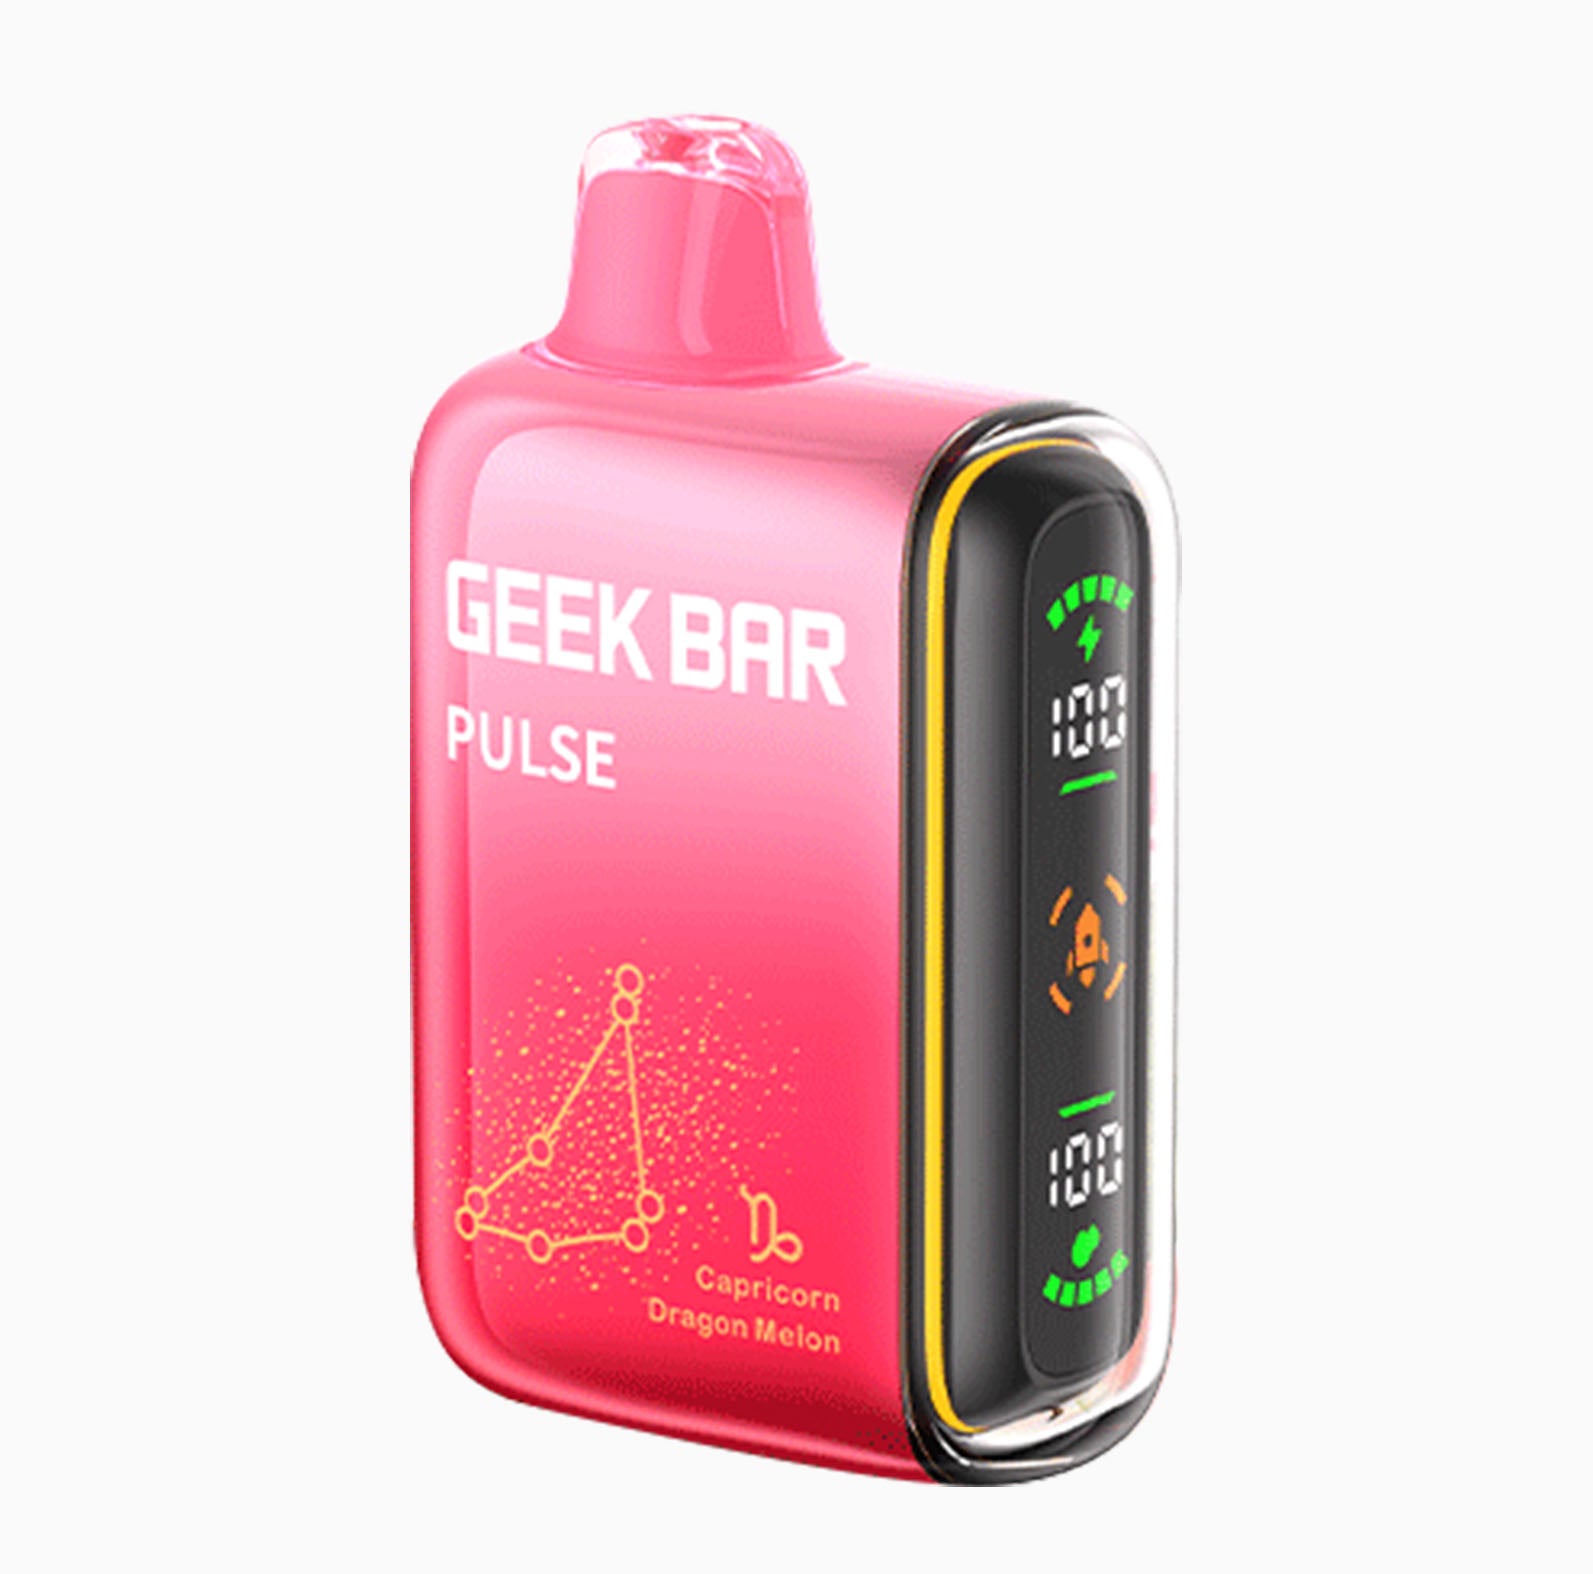 Geek Bar Pulse - Capricorn Dragon Melon